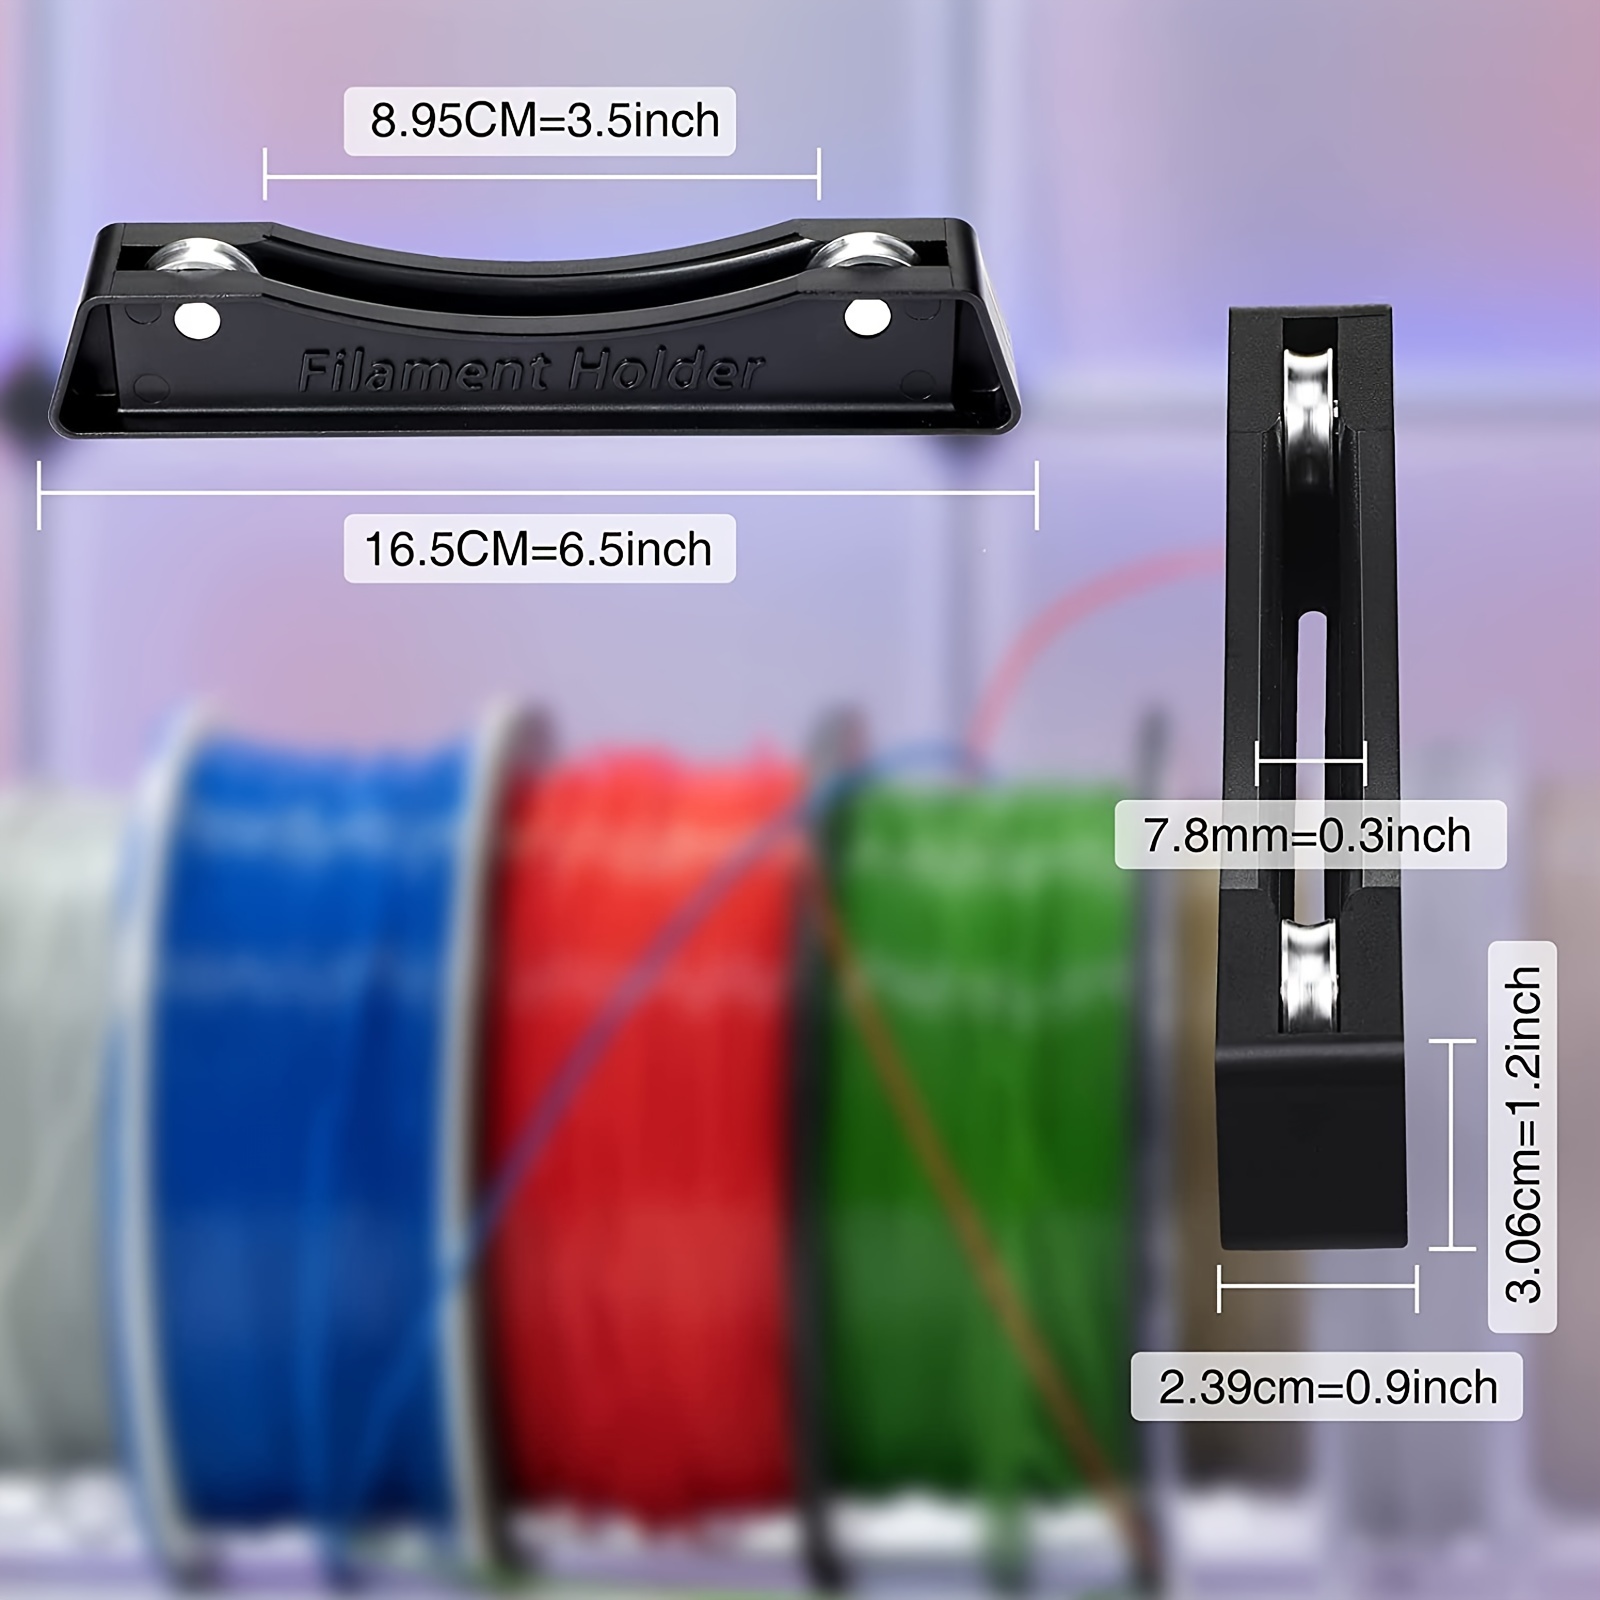 PETG 3D Printer Filament, SUNLU Super Neat Filament Spool, Strong PETG  Filament 1.75mm Dimensional Accuracy +/- 0.02mm, 1KG Spoo